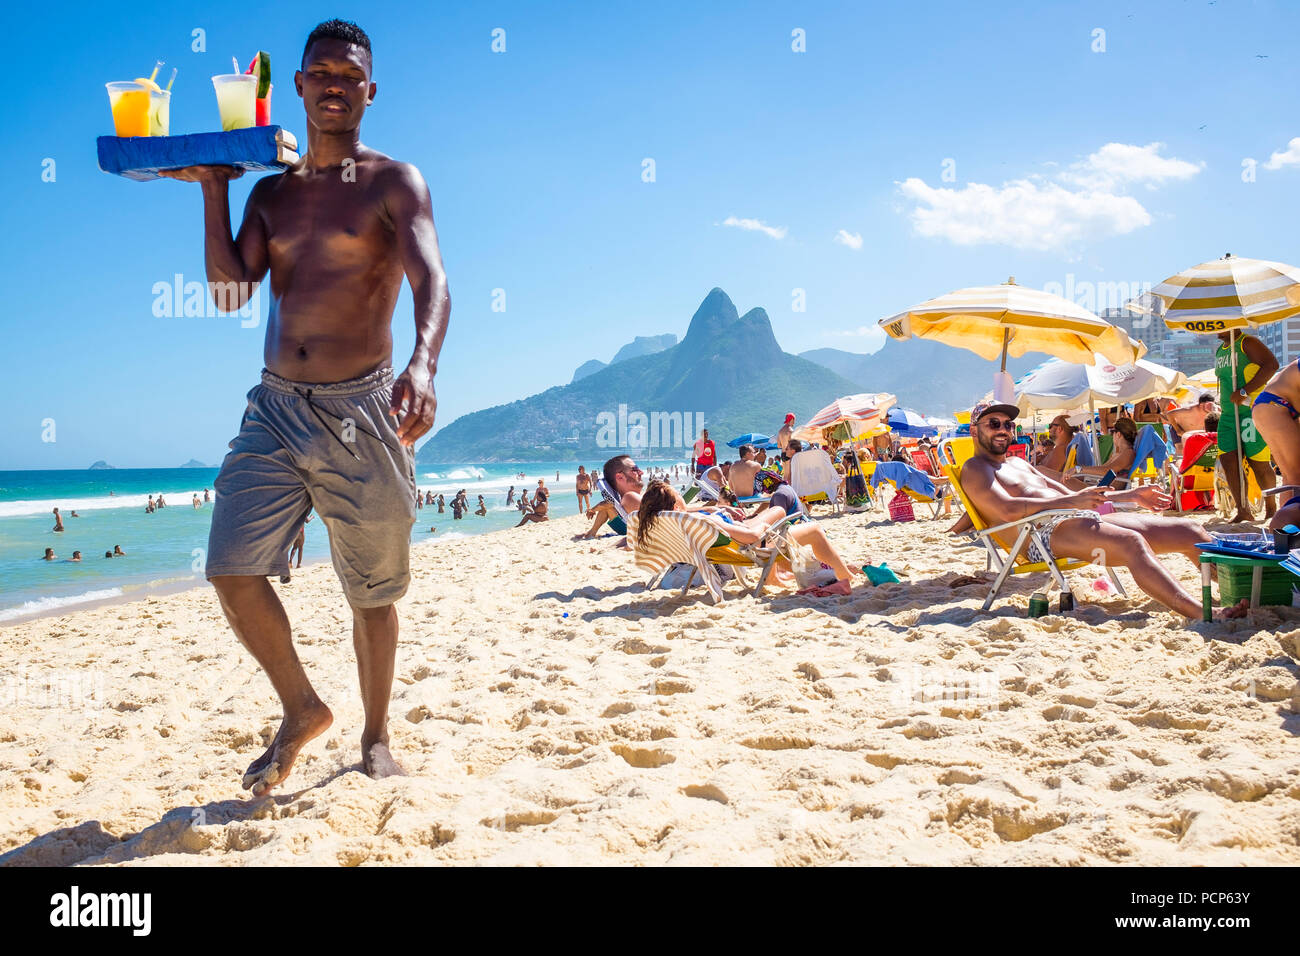 RIO DE JANEIRO - CIRCA MARCH, 2018: A beach vendor selling caipirinhas calls out to  customers on Ipanema Beach with Two Brothers mountain backdrop Stock Photo